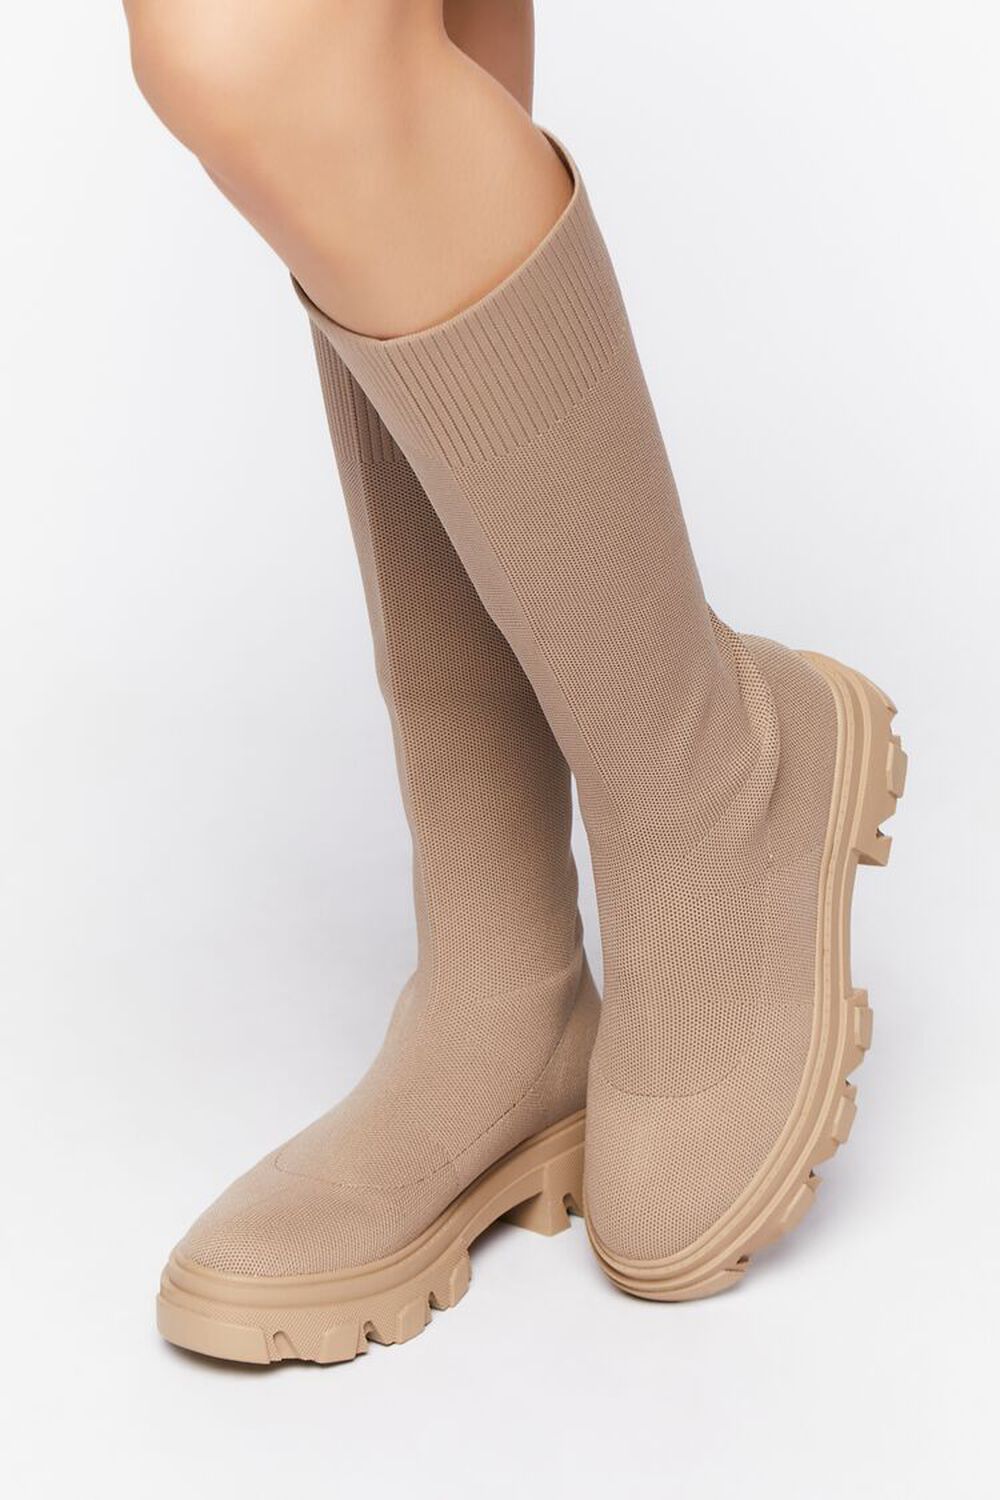 TAUPE Calf-High Lug-Sole Sock Boots, image 1